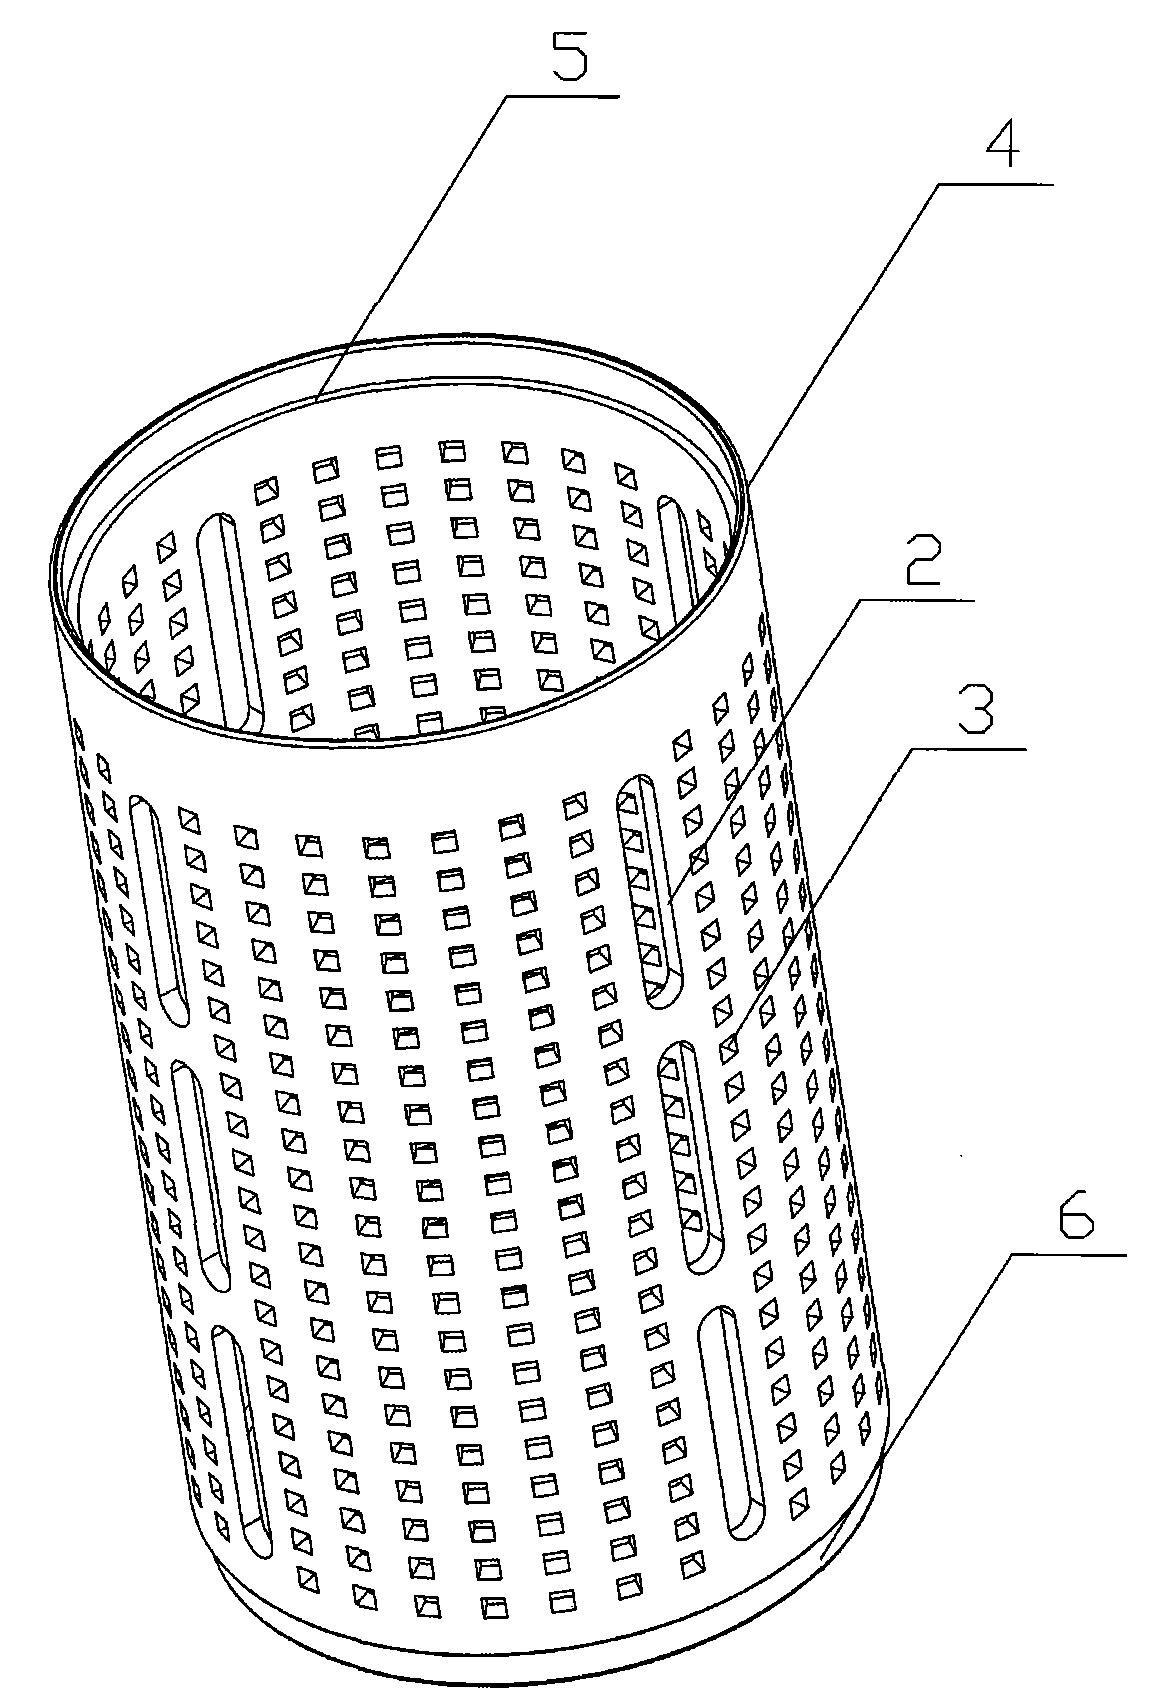 Dendrobium planting column, pot and method